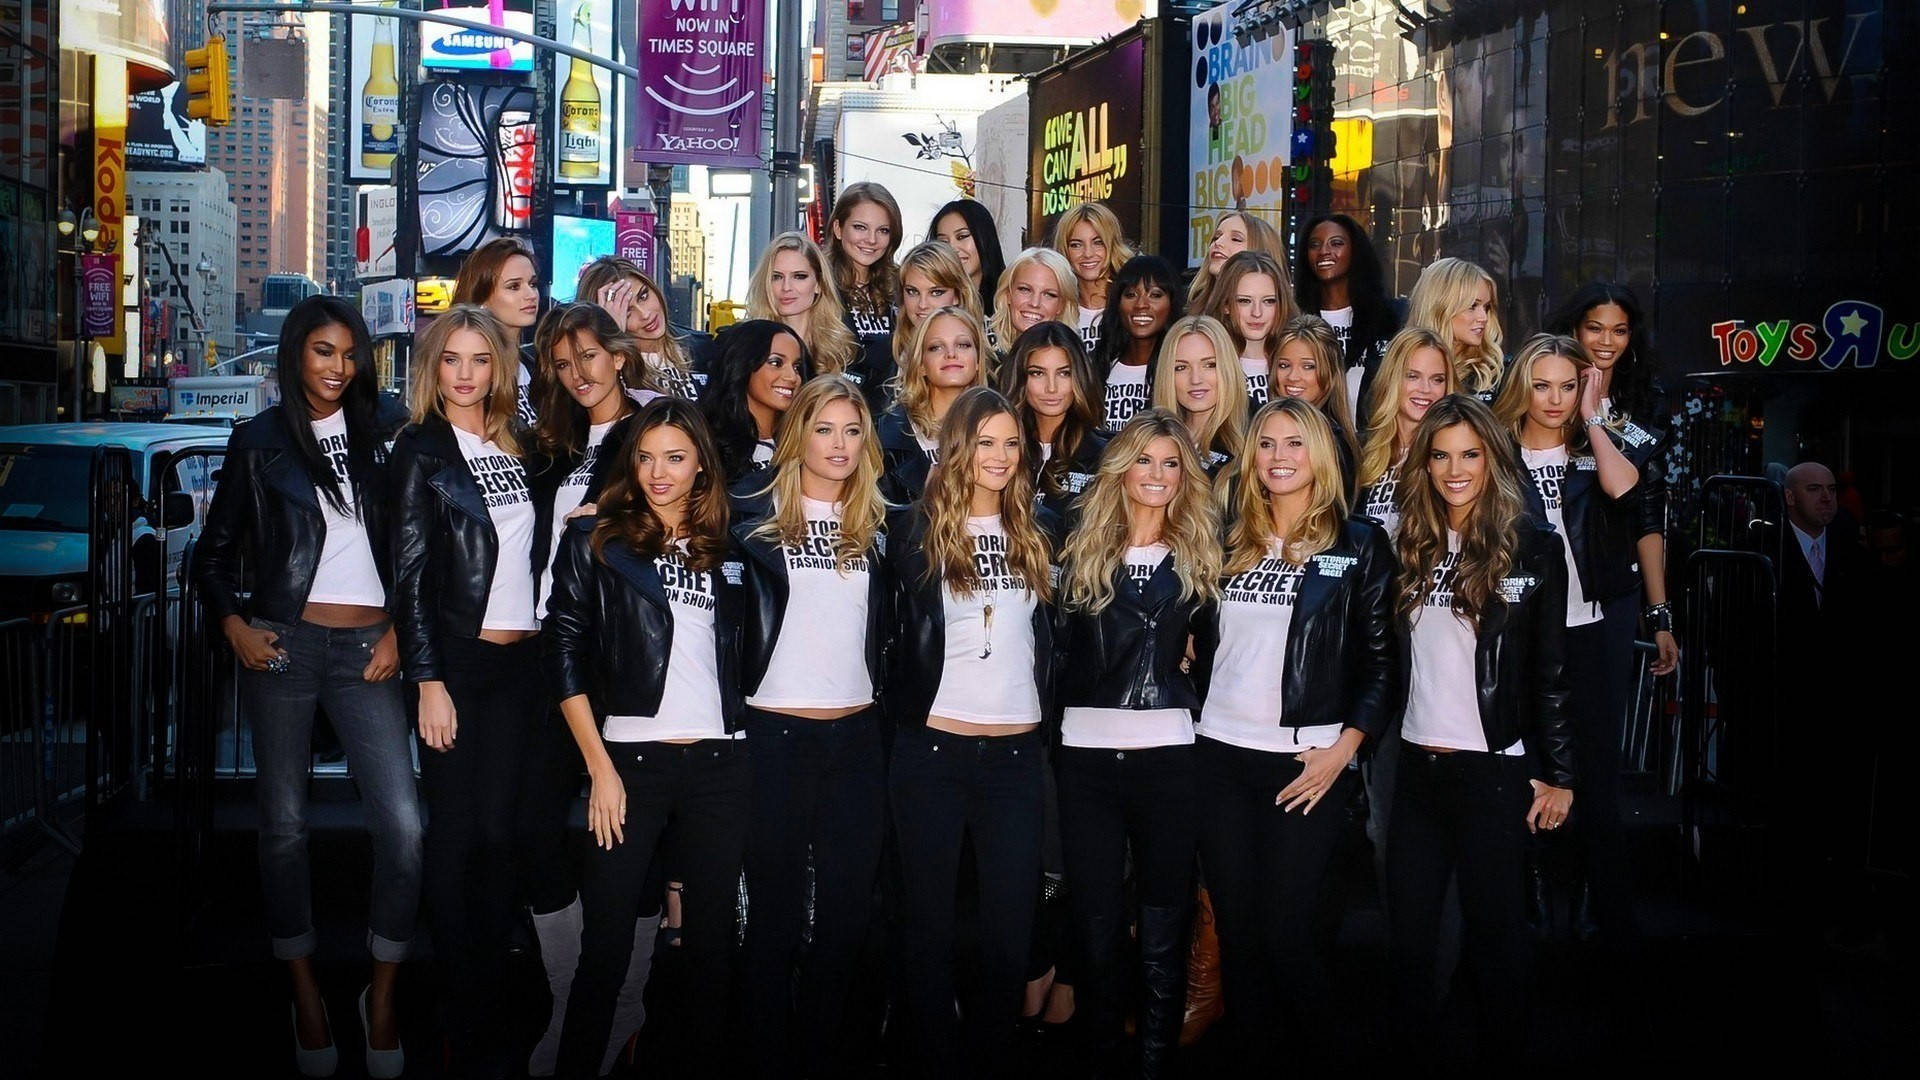 Victoria's Secret Angels At Times Square Wallpaper